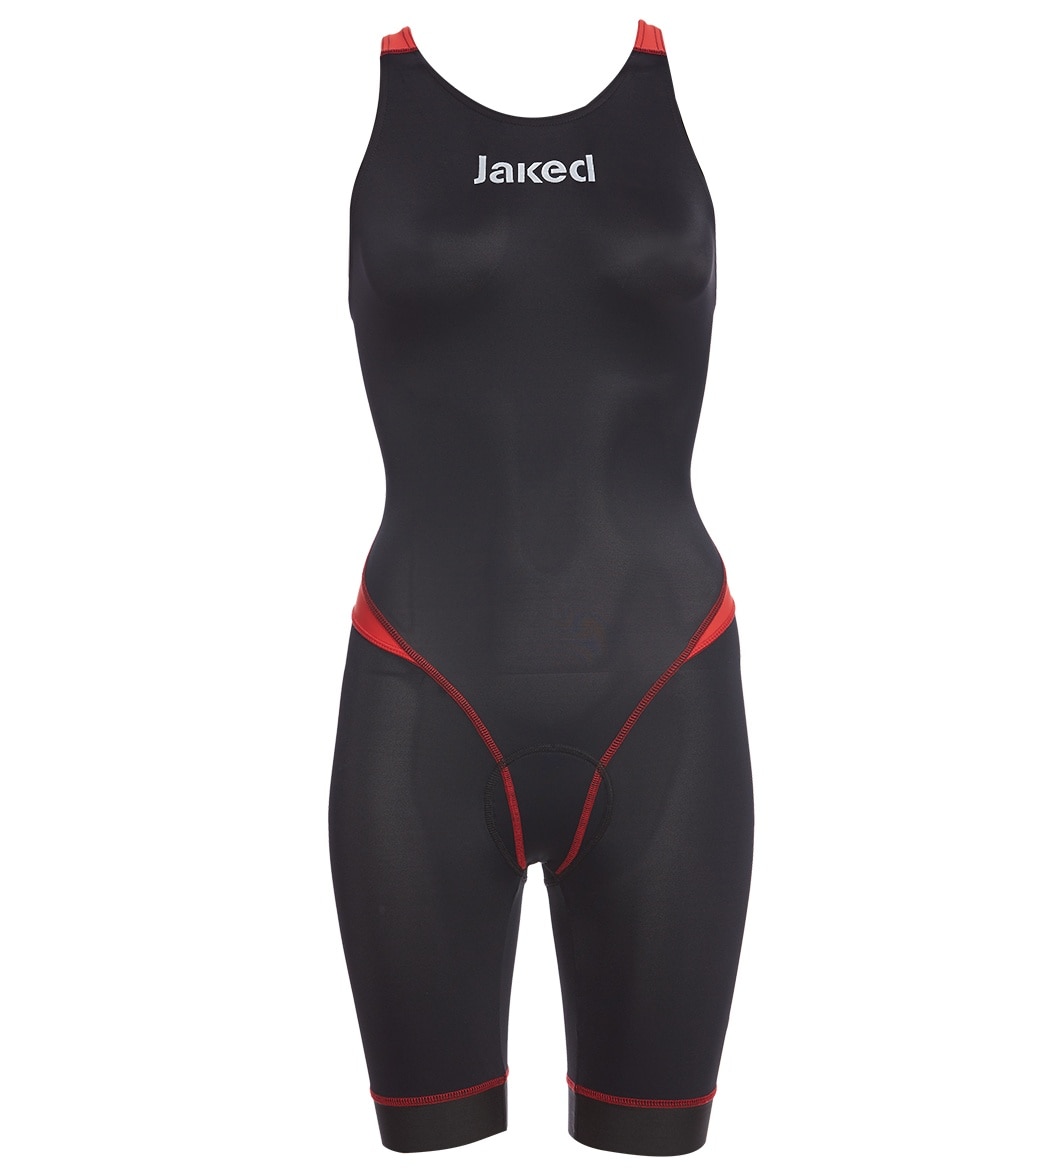 Jaked Women's Trisuit - Black/Red Xx-Small Elastane/Polyamide - Swimoutlet.com